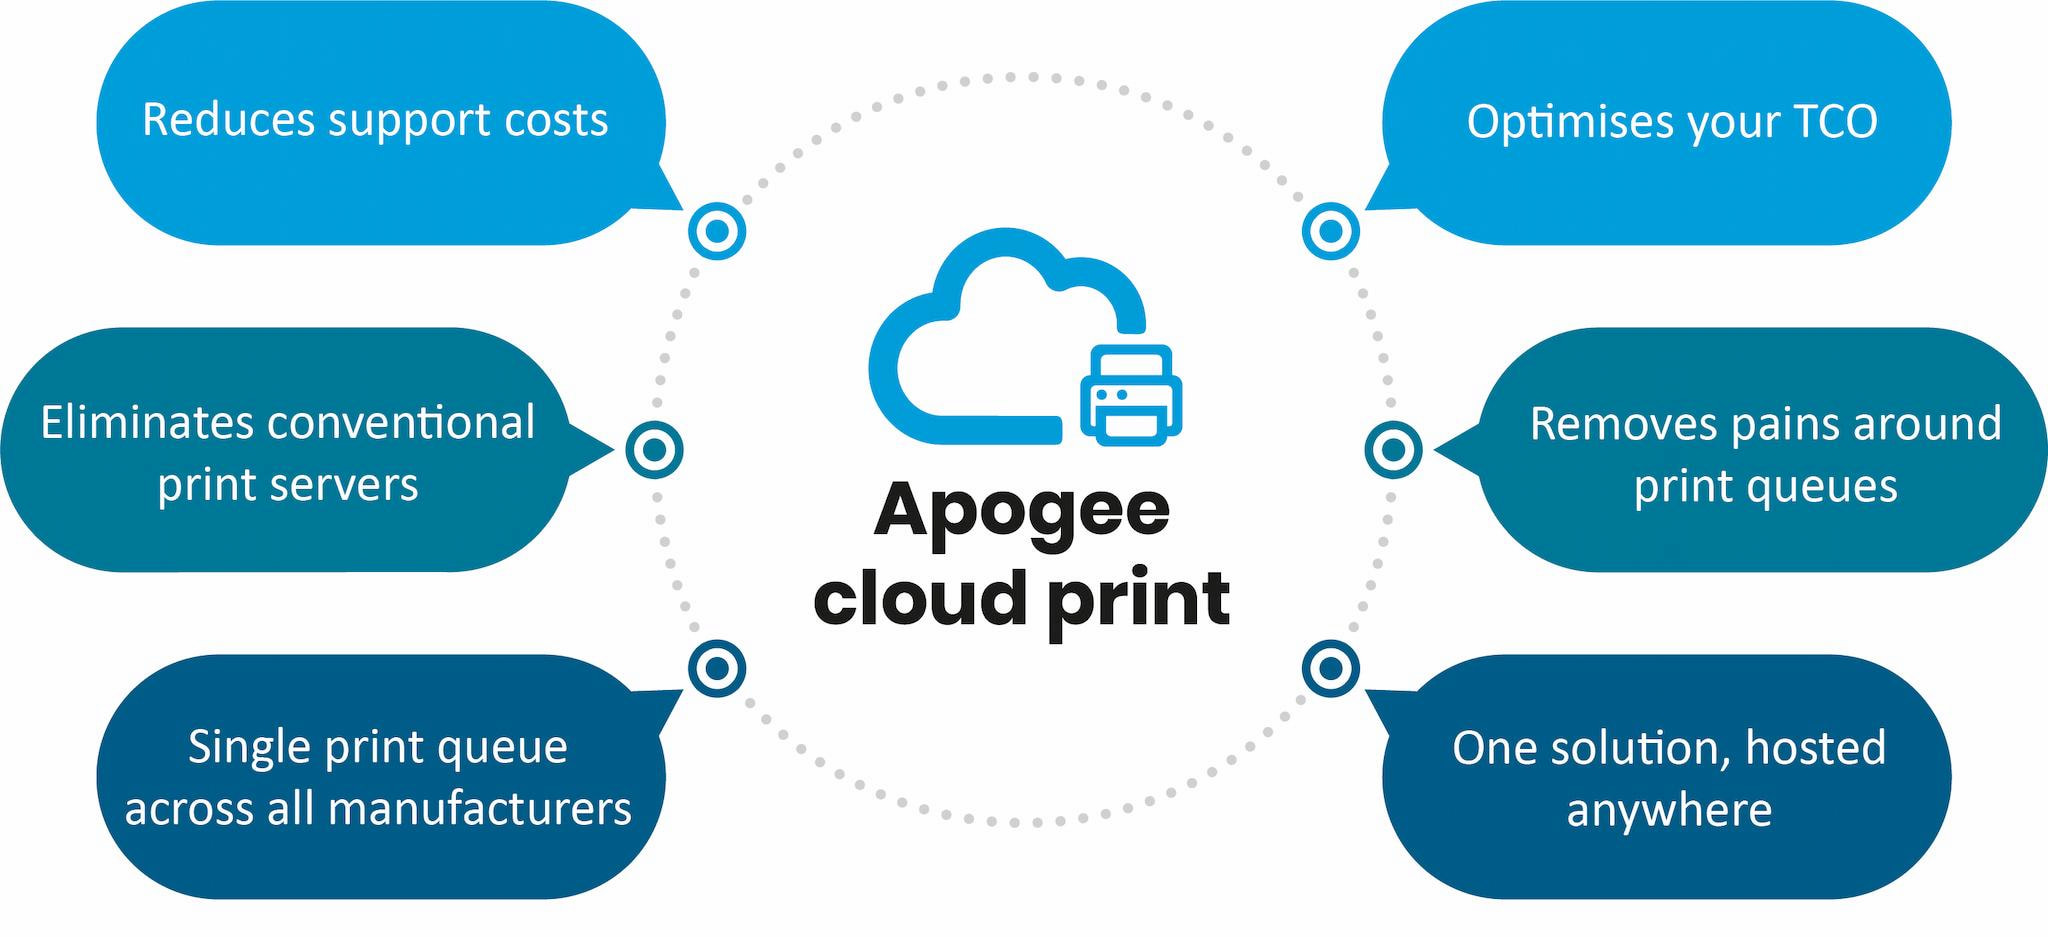 apogee cloud print infographic